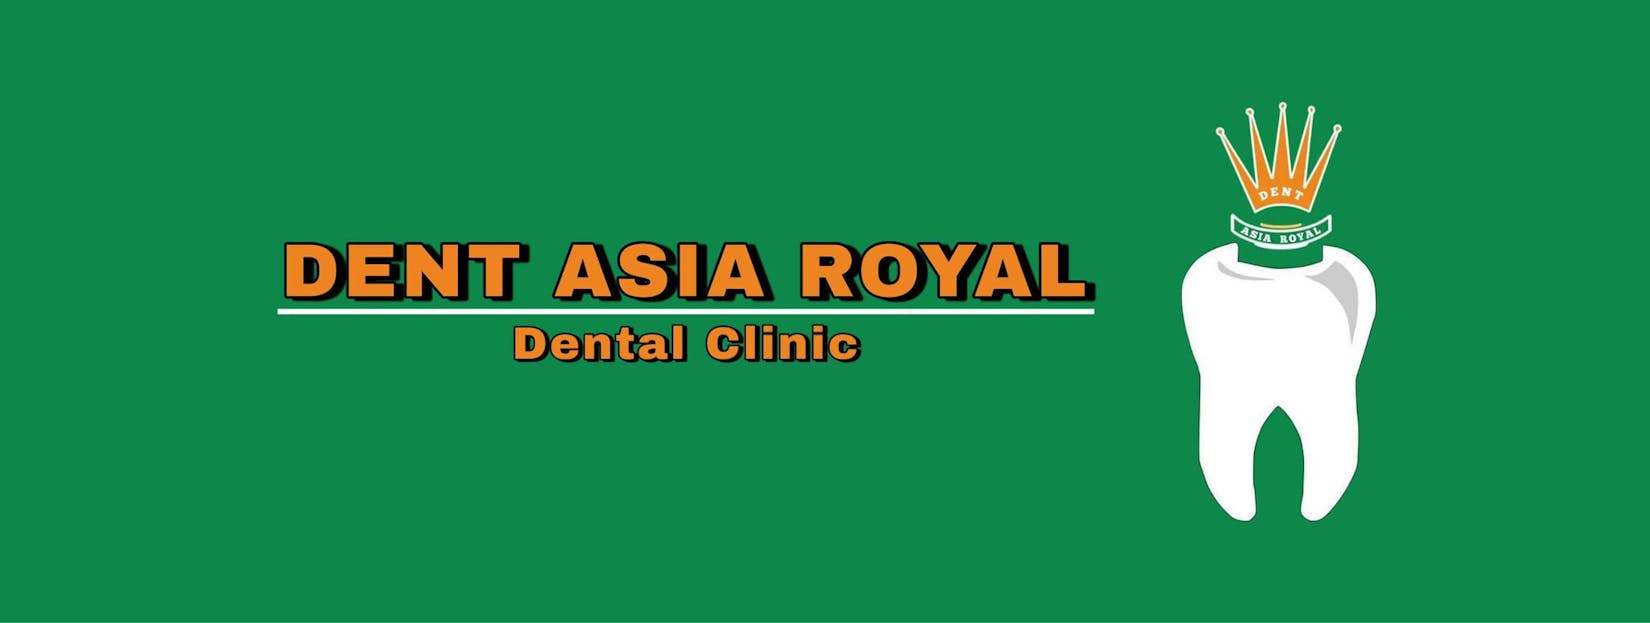 Dent Asia Royal | Medical